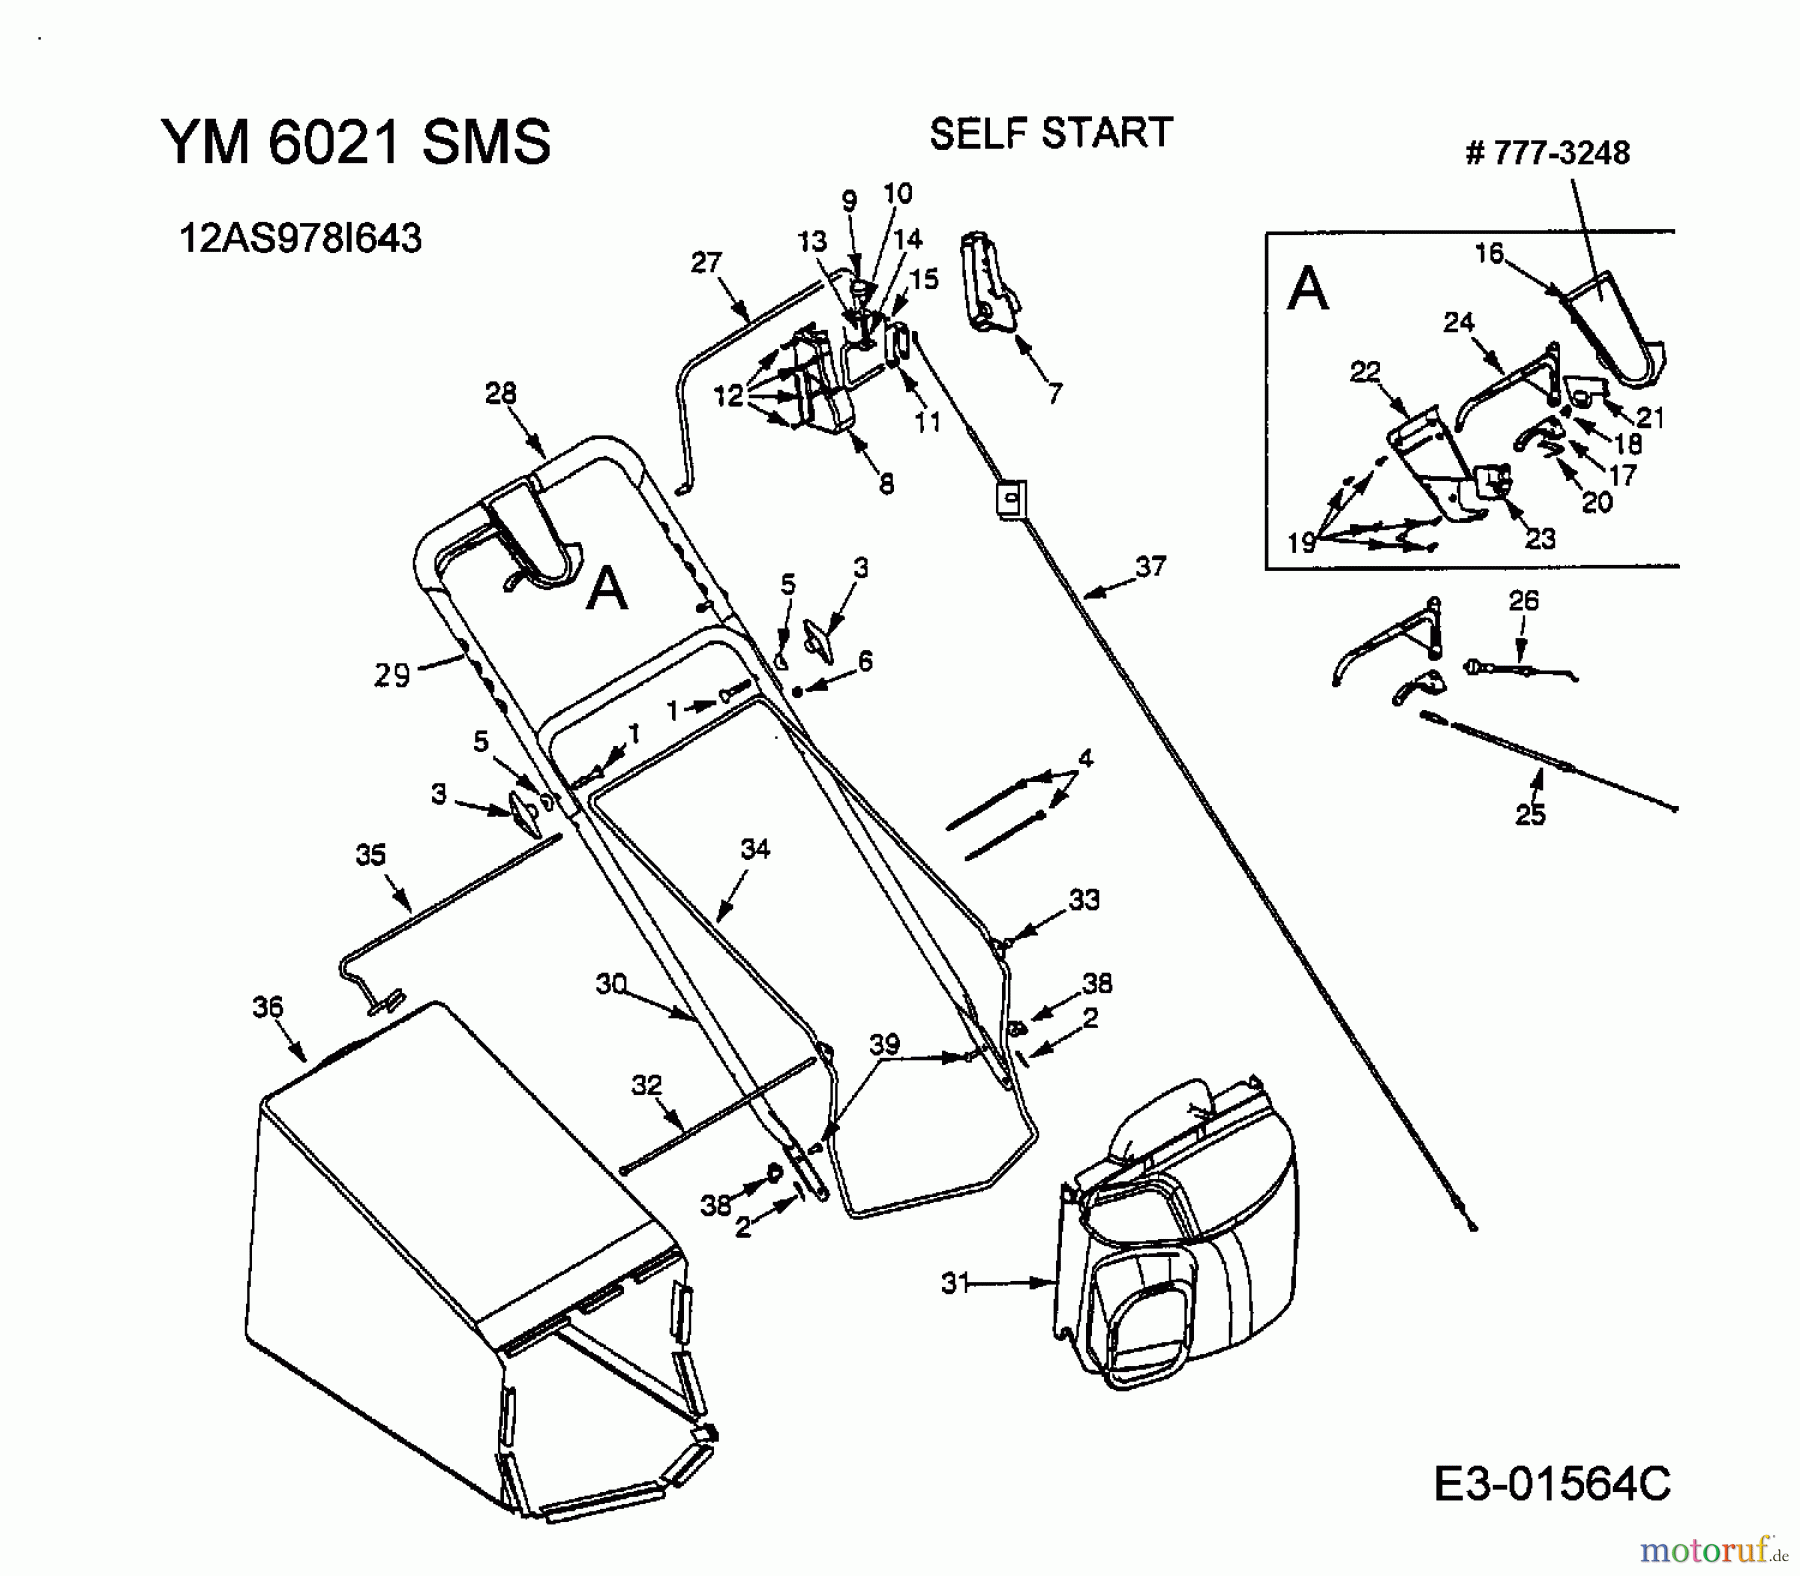  Yard-Man Motormäher mit Antrieb YM 6021 SMS 12AS979T643  (2002) Grasfangsack, Holm